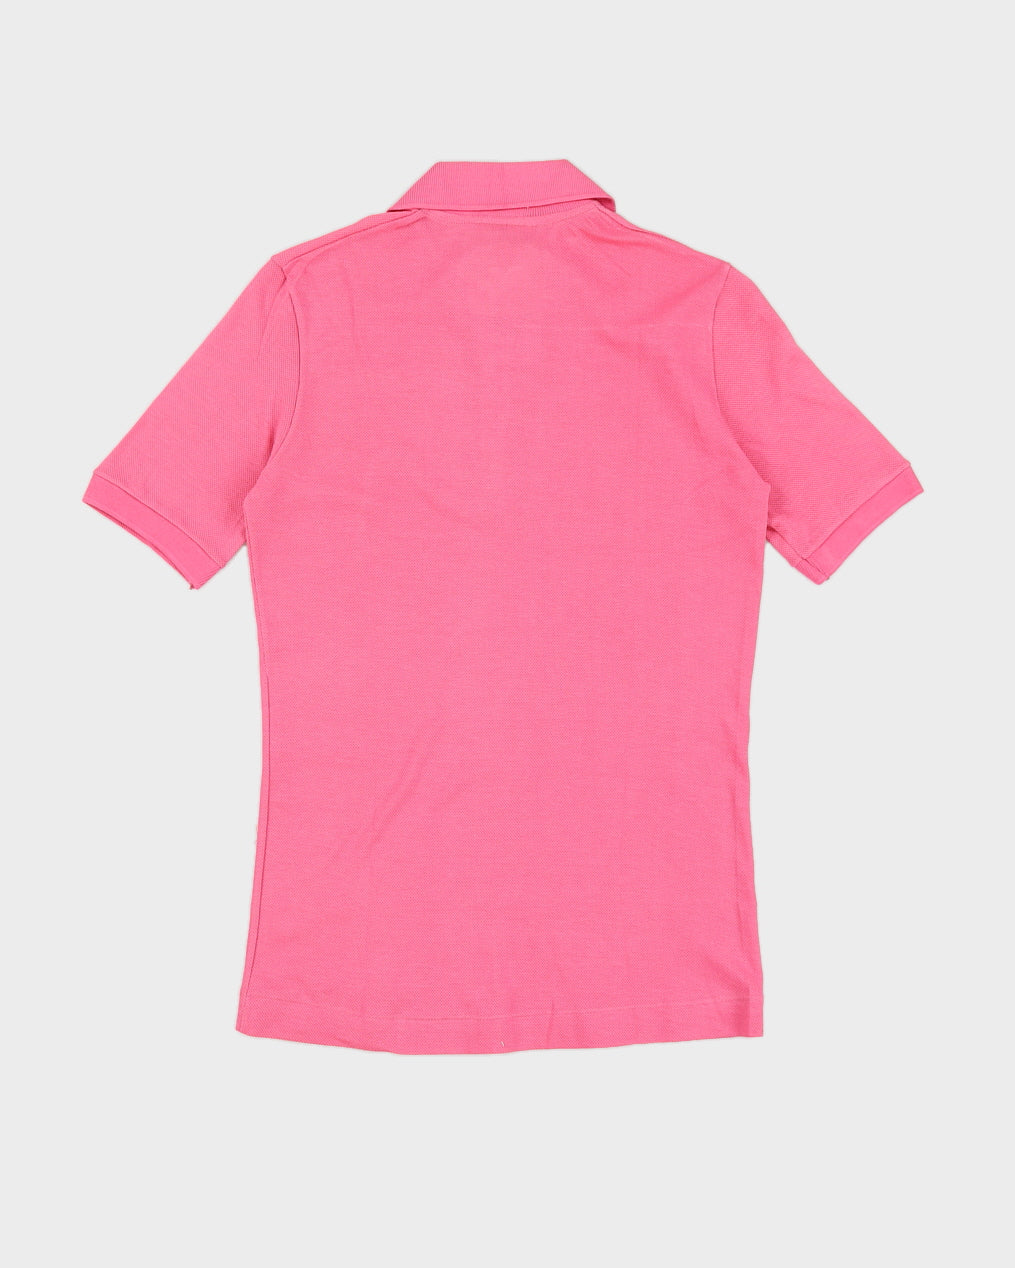 Vintage 70s Benetton Pink Polo Shirt - L